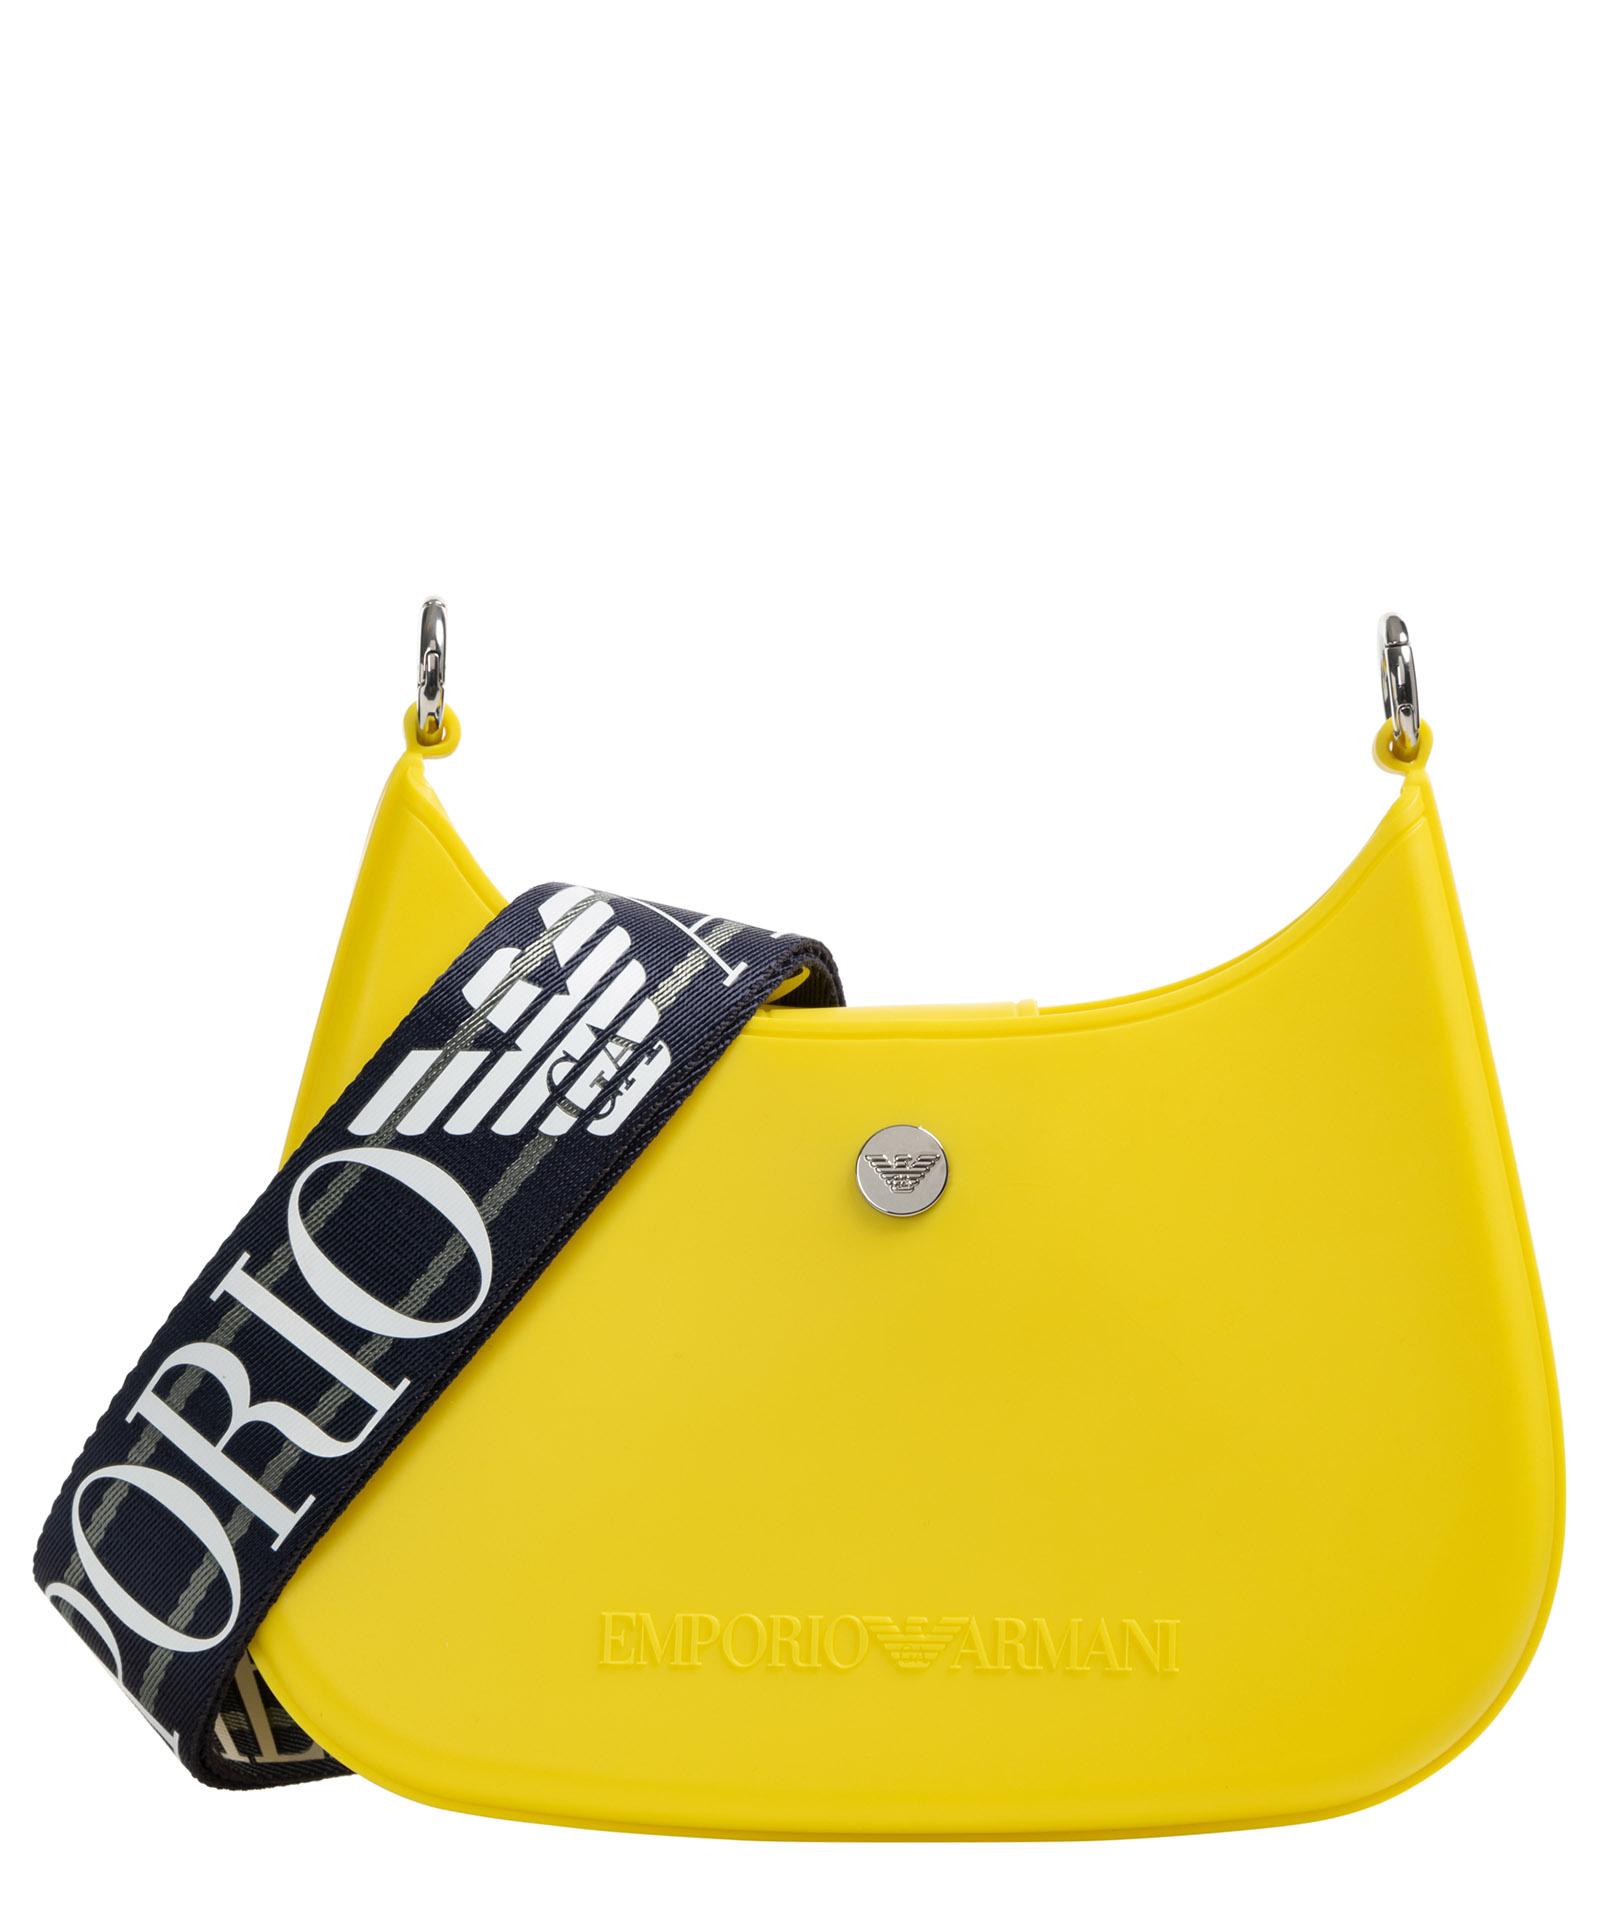 Emporio Armani Gummy Bag Gummy Bag Hobo Bag in Yellow | Lyst